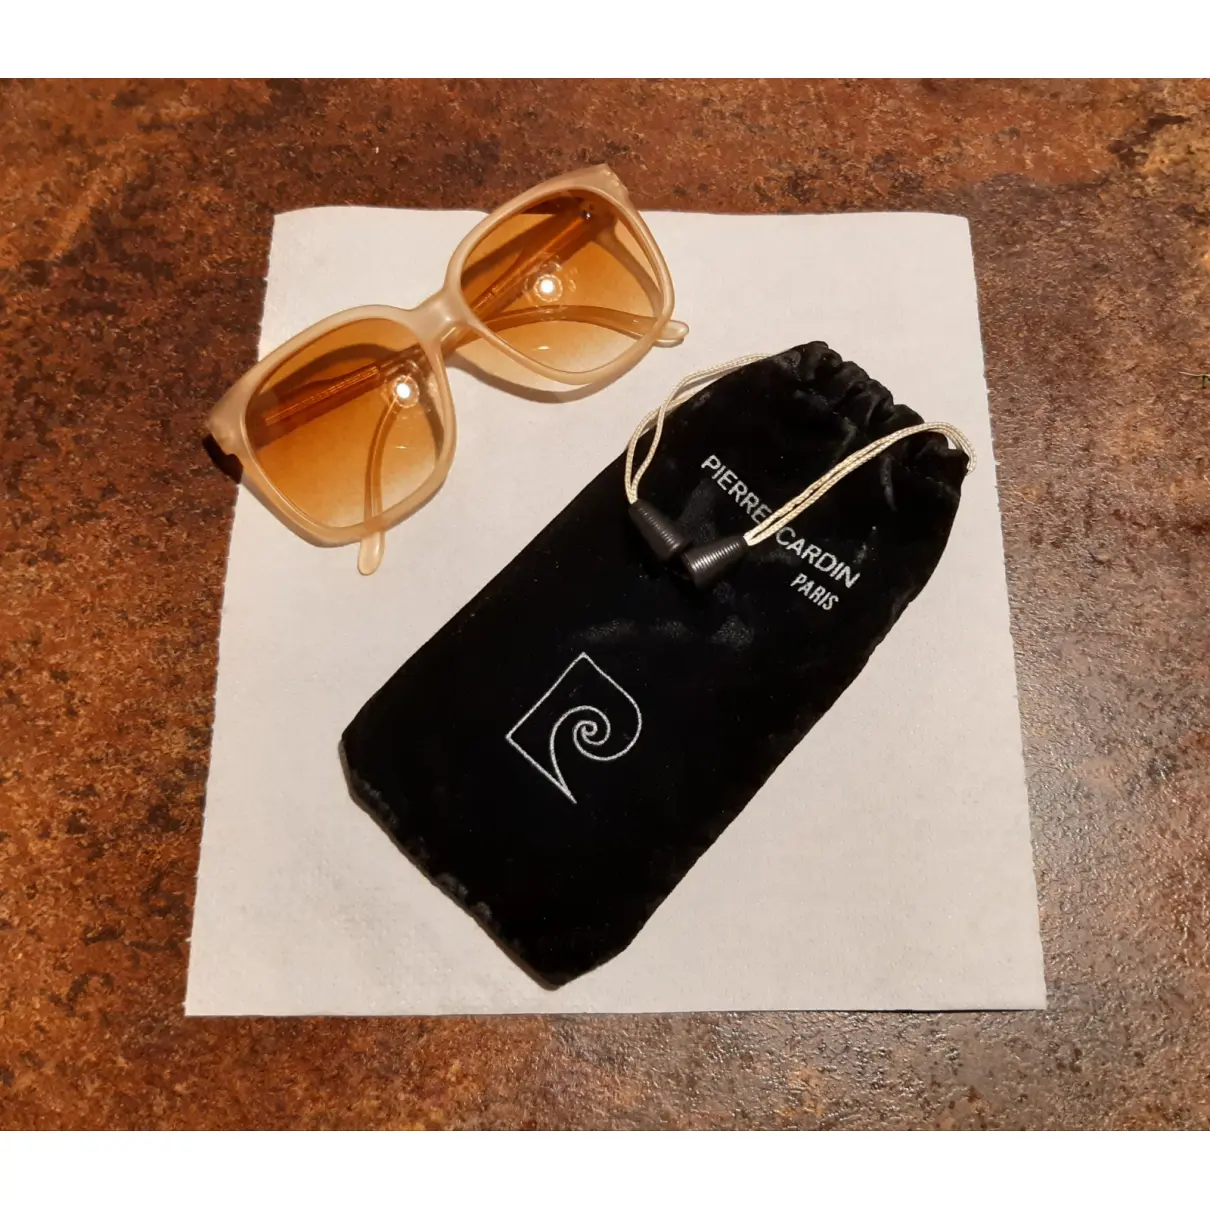 Oversized sunglasses Pierre Cardin - Vintage